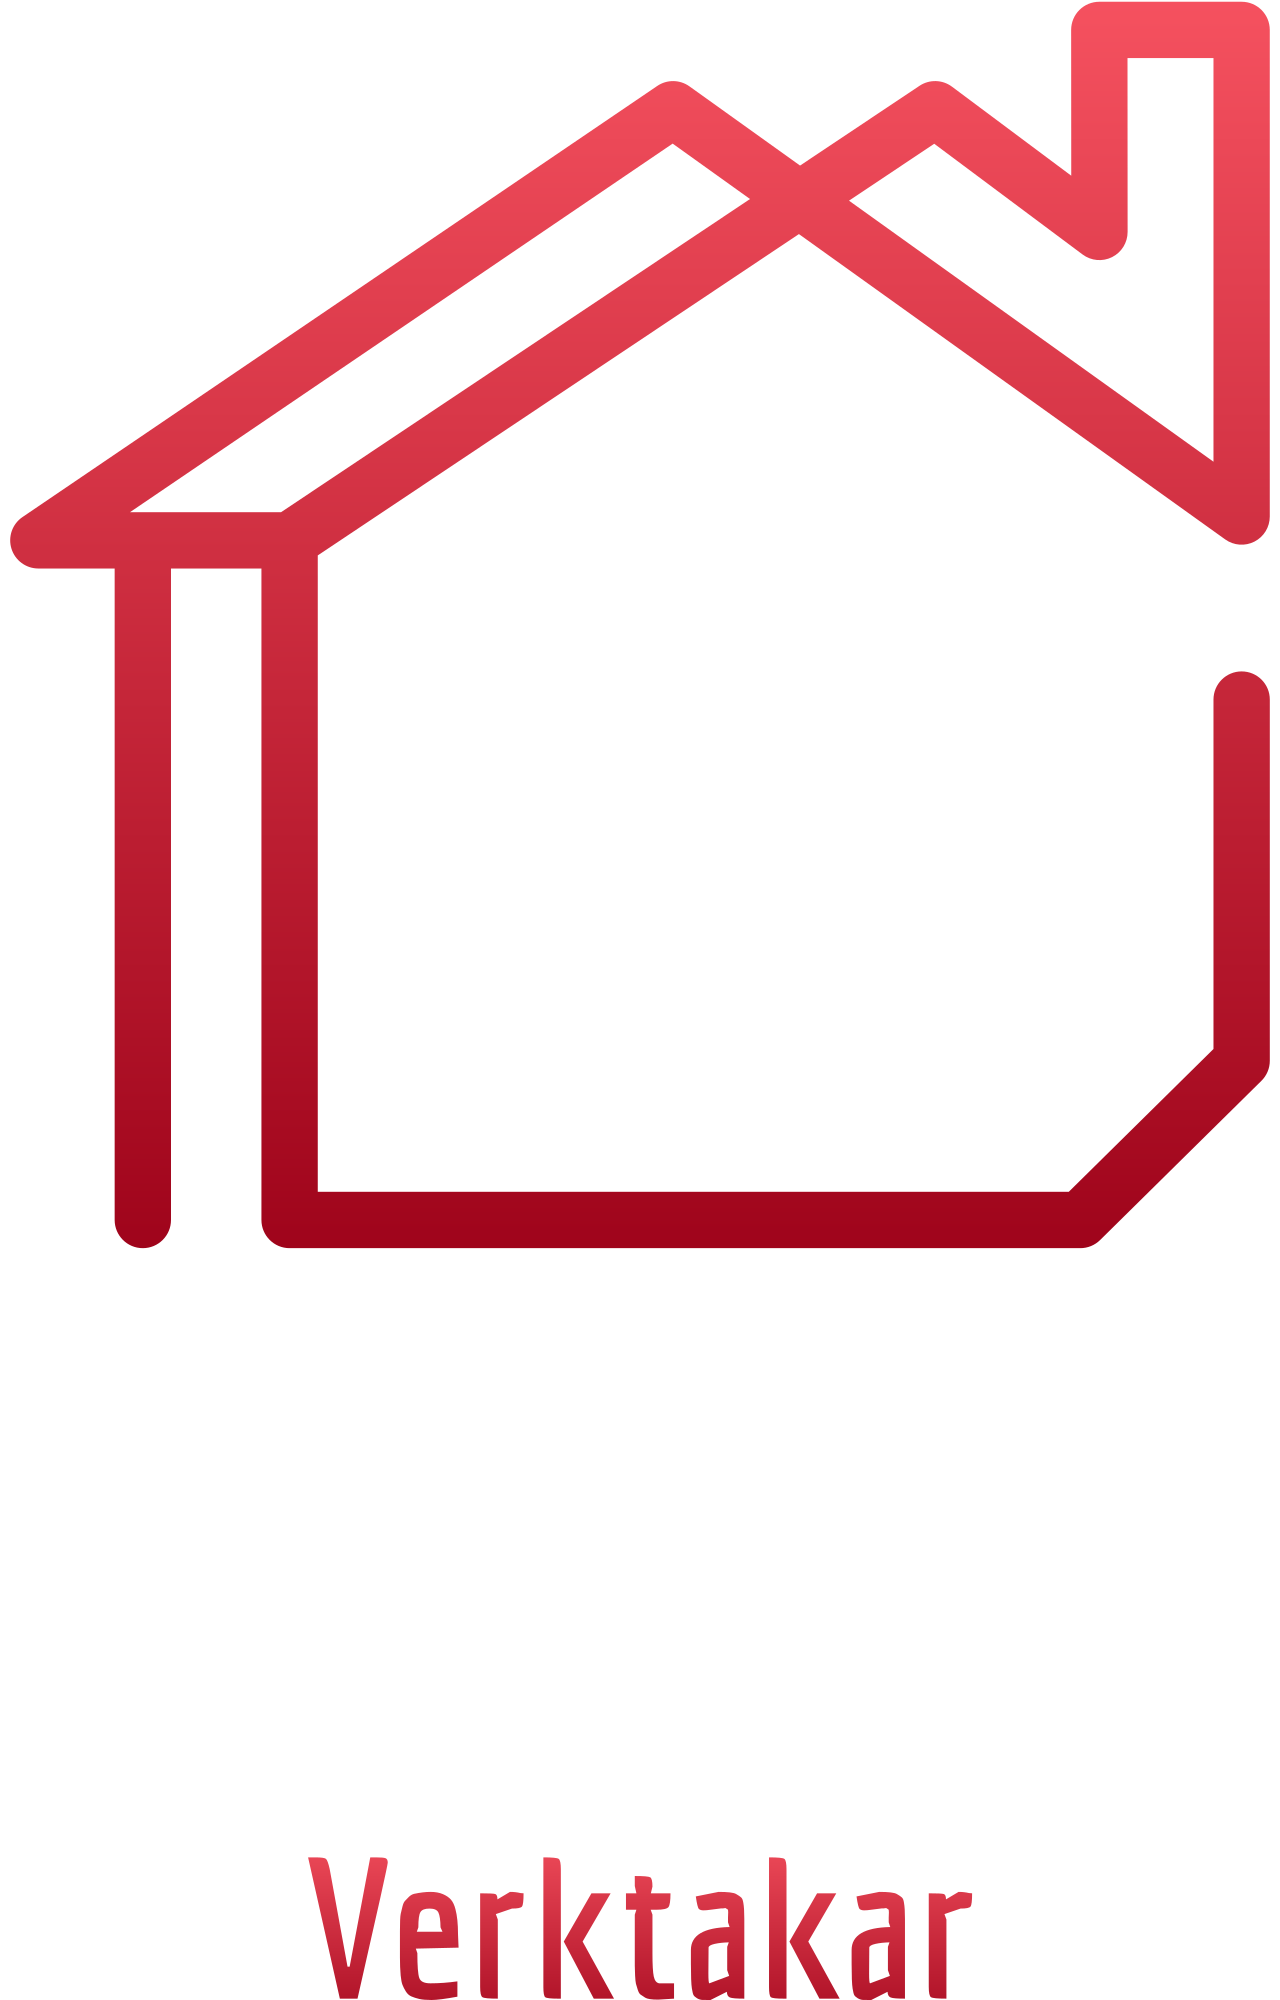 Esjan's logo